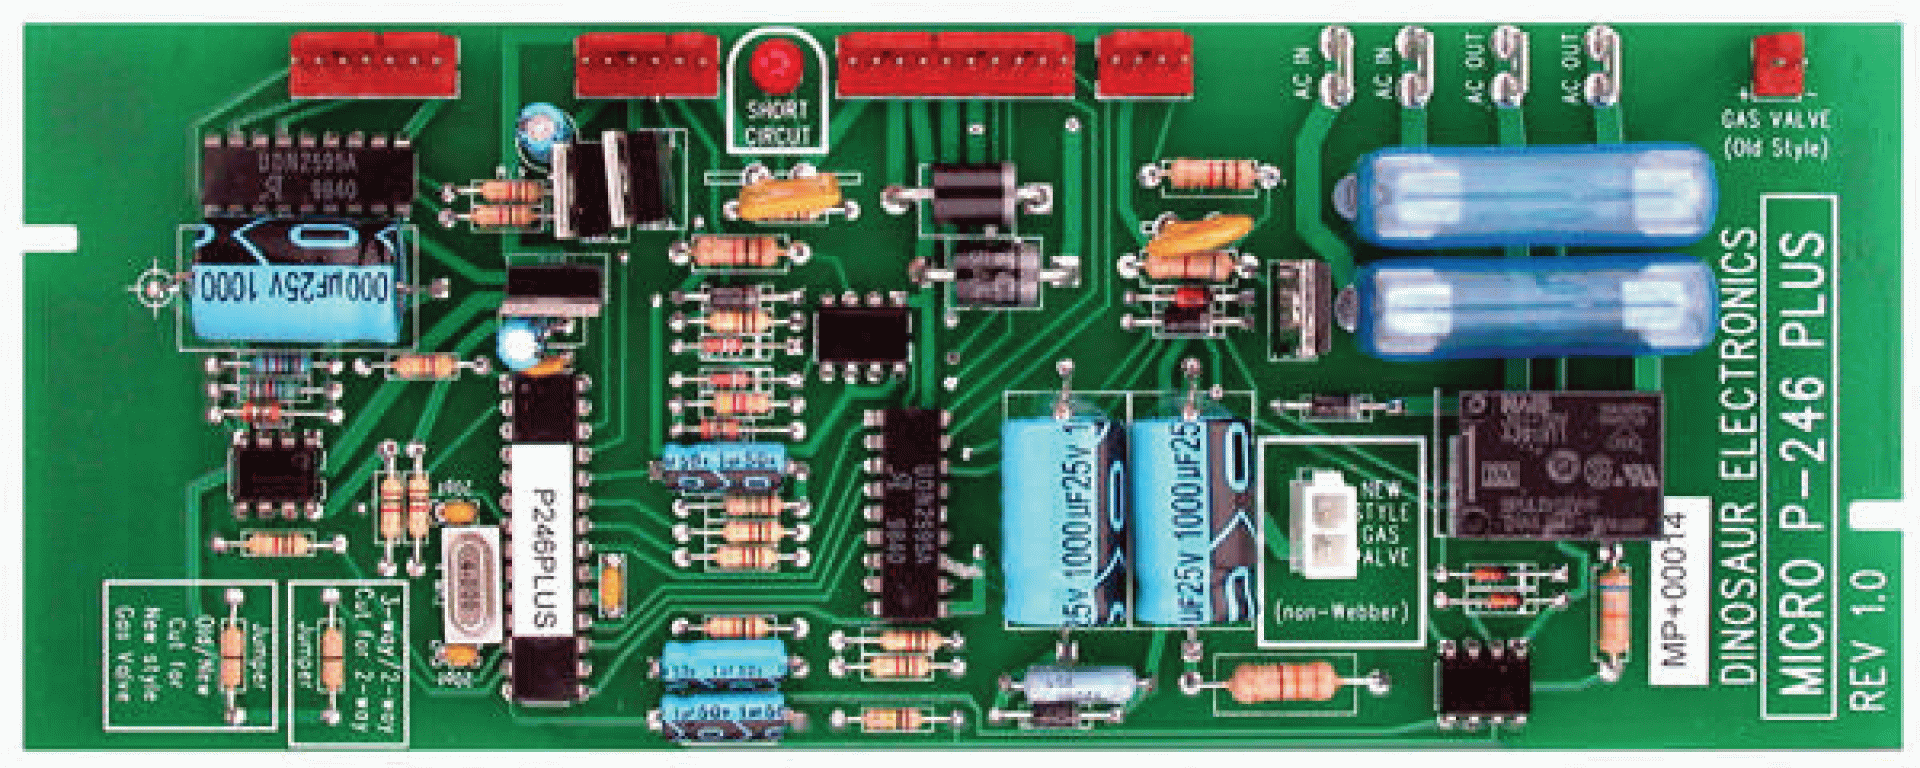 Dinosaur Electric | MICRO P-246 PLUS | Refrigerator Power Supply Circuit Board